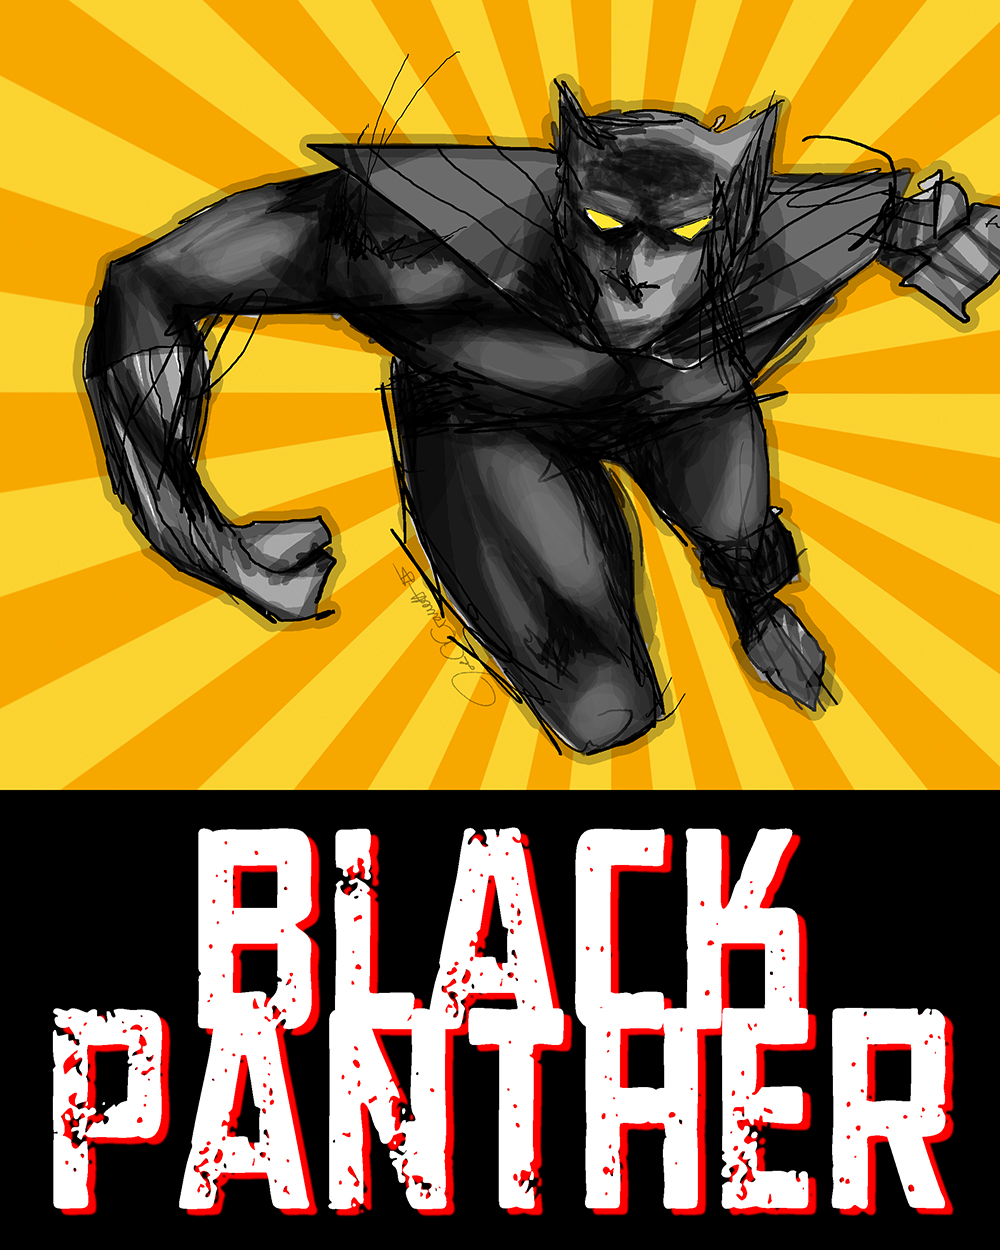 The Black Panther art by John Garrett